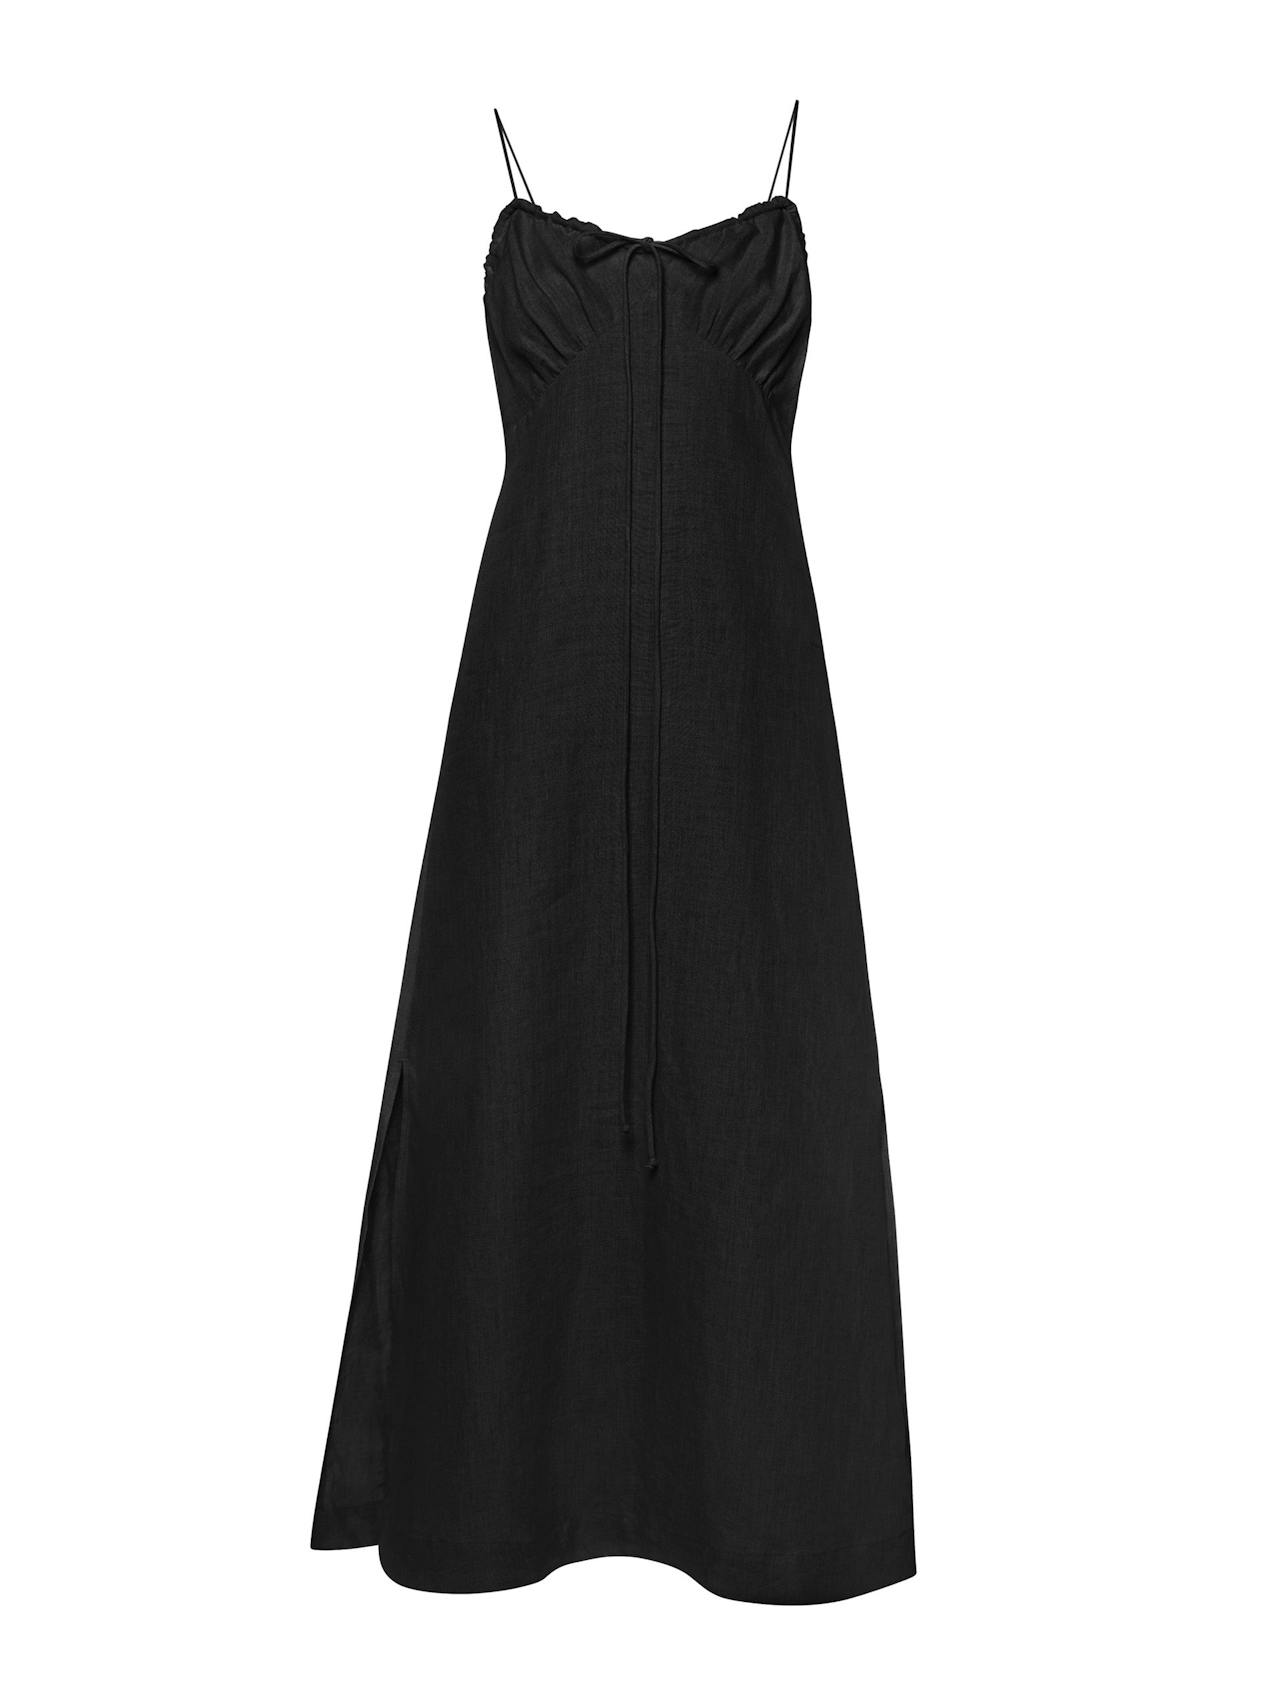 Black linen Selina dress